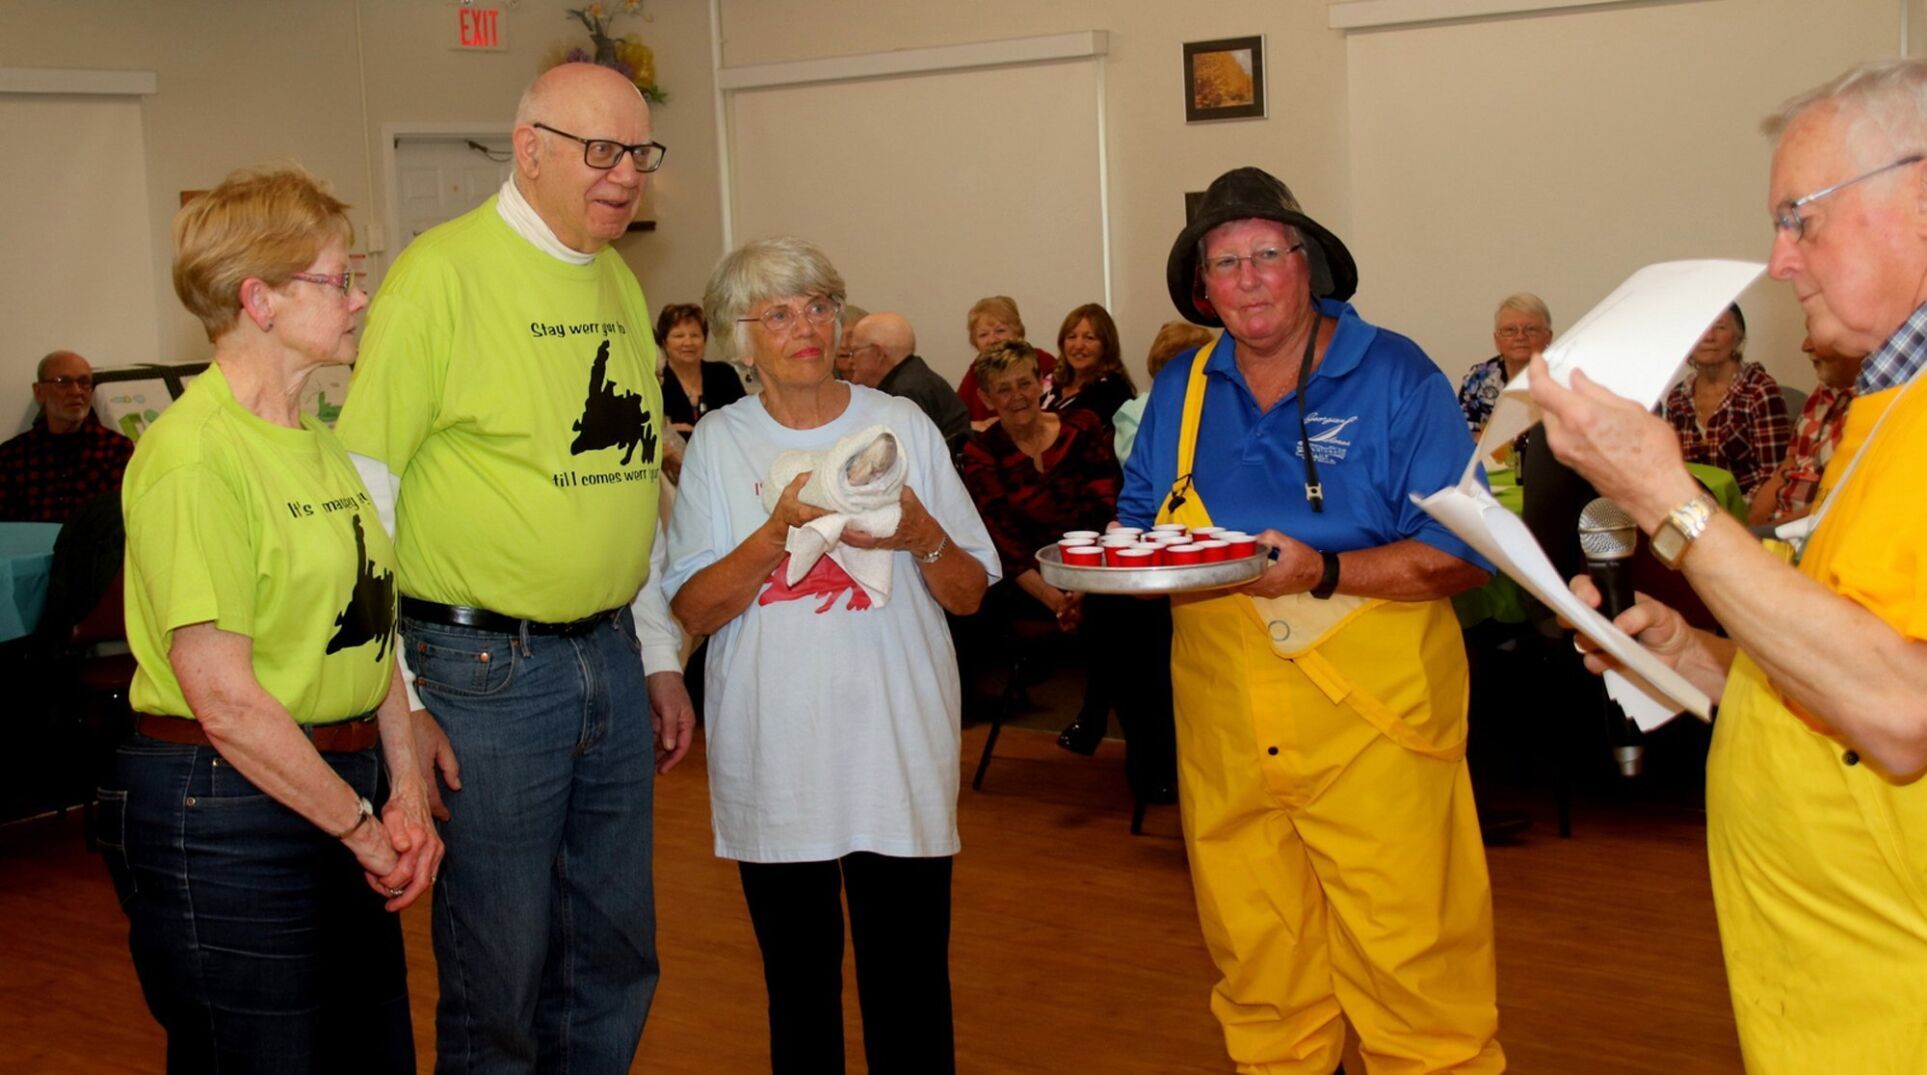 Newfoundland kitchen party a screeching hit at Balm Beach seniors club